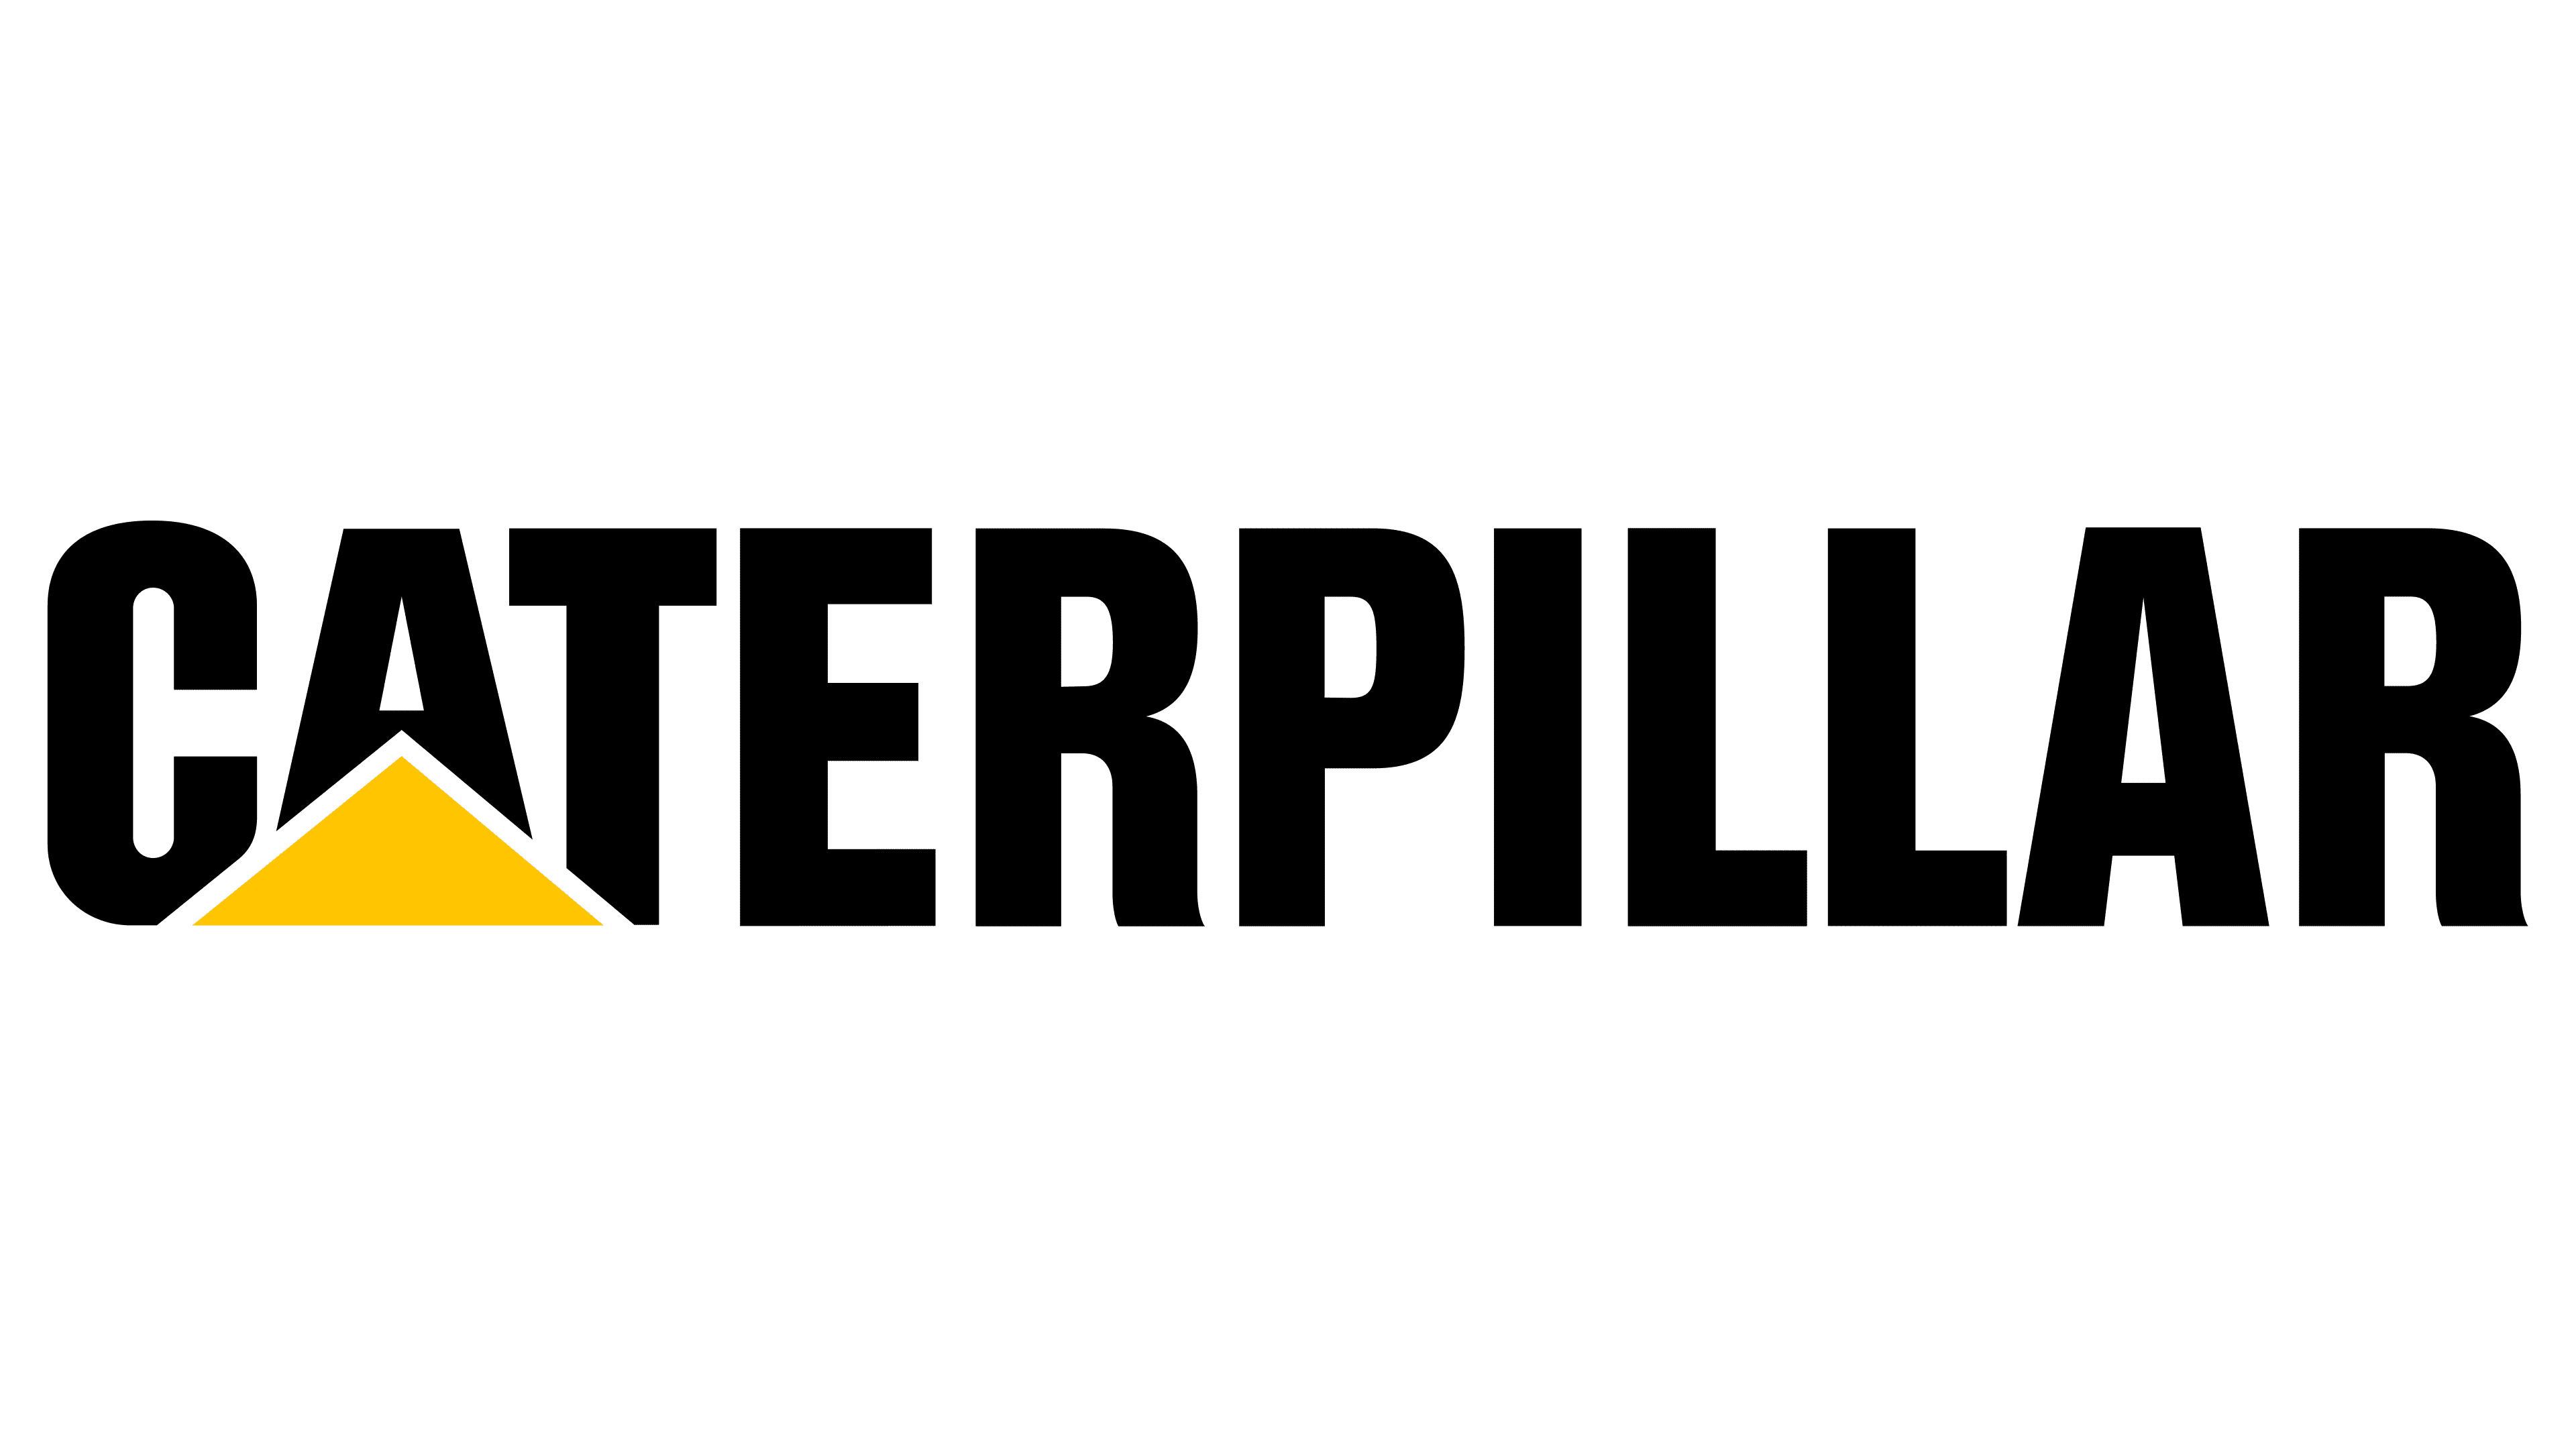 Apply for Caterpillar Internship Opportunities